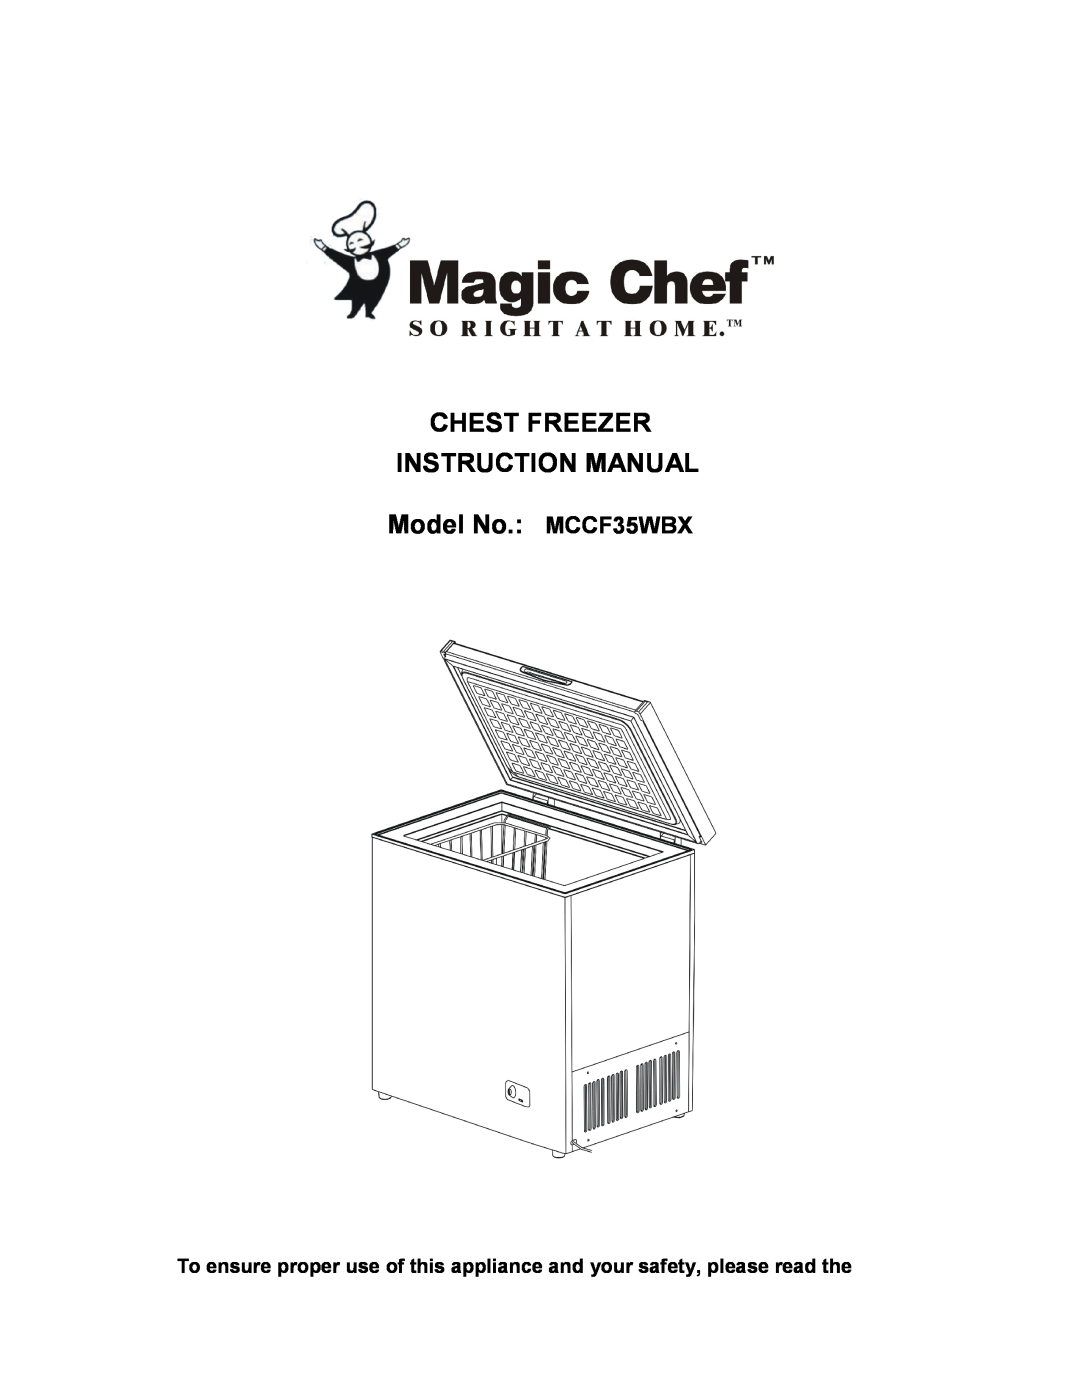 Magic Chef instruction manual Model No. MCCF35WBX 